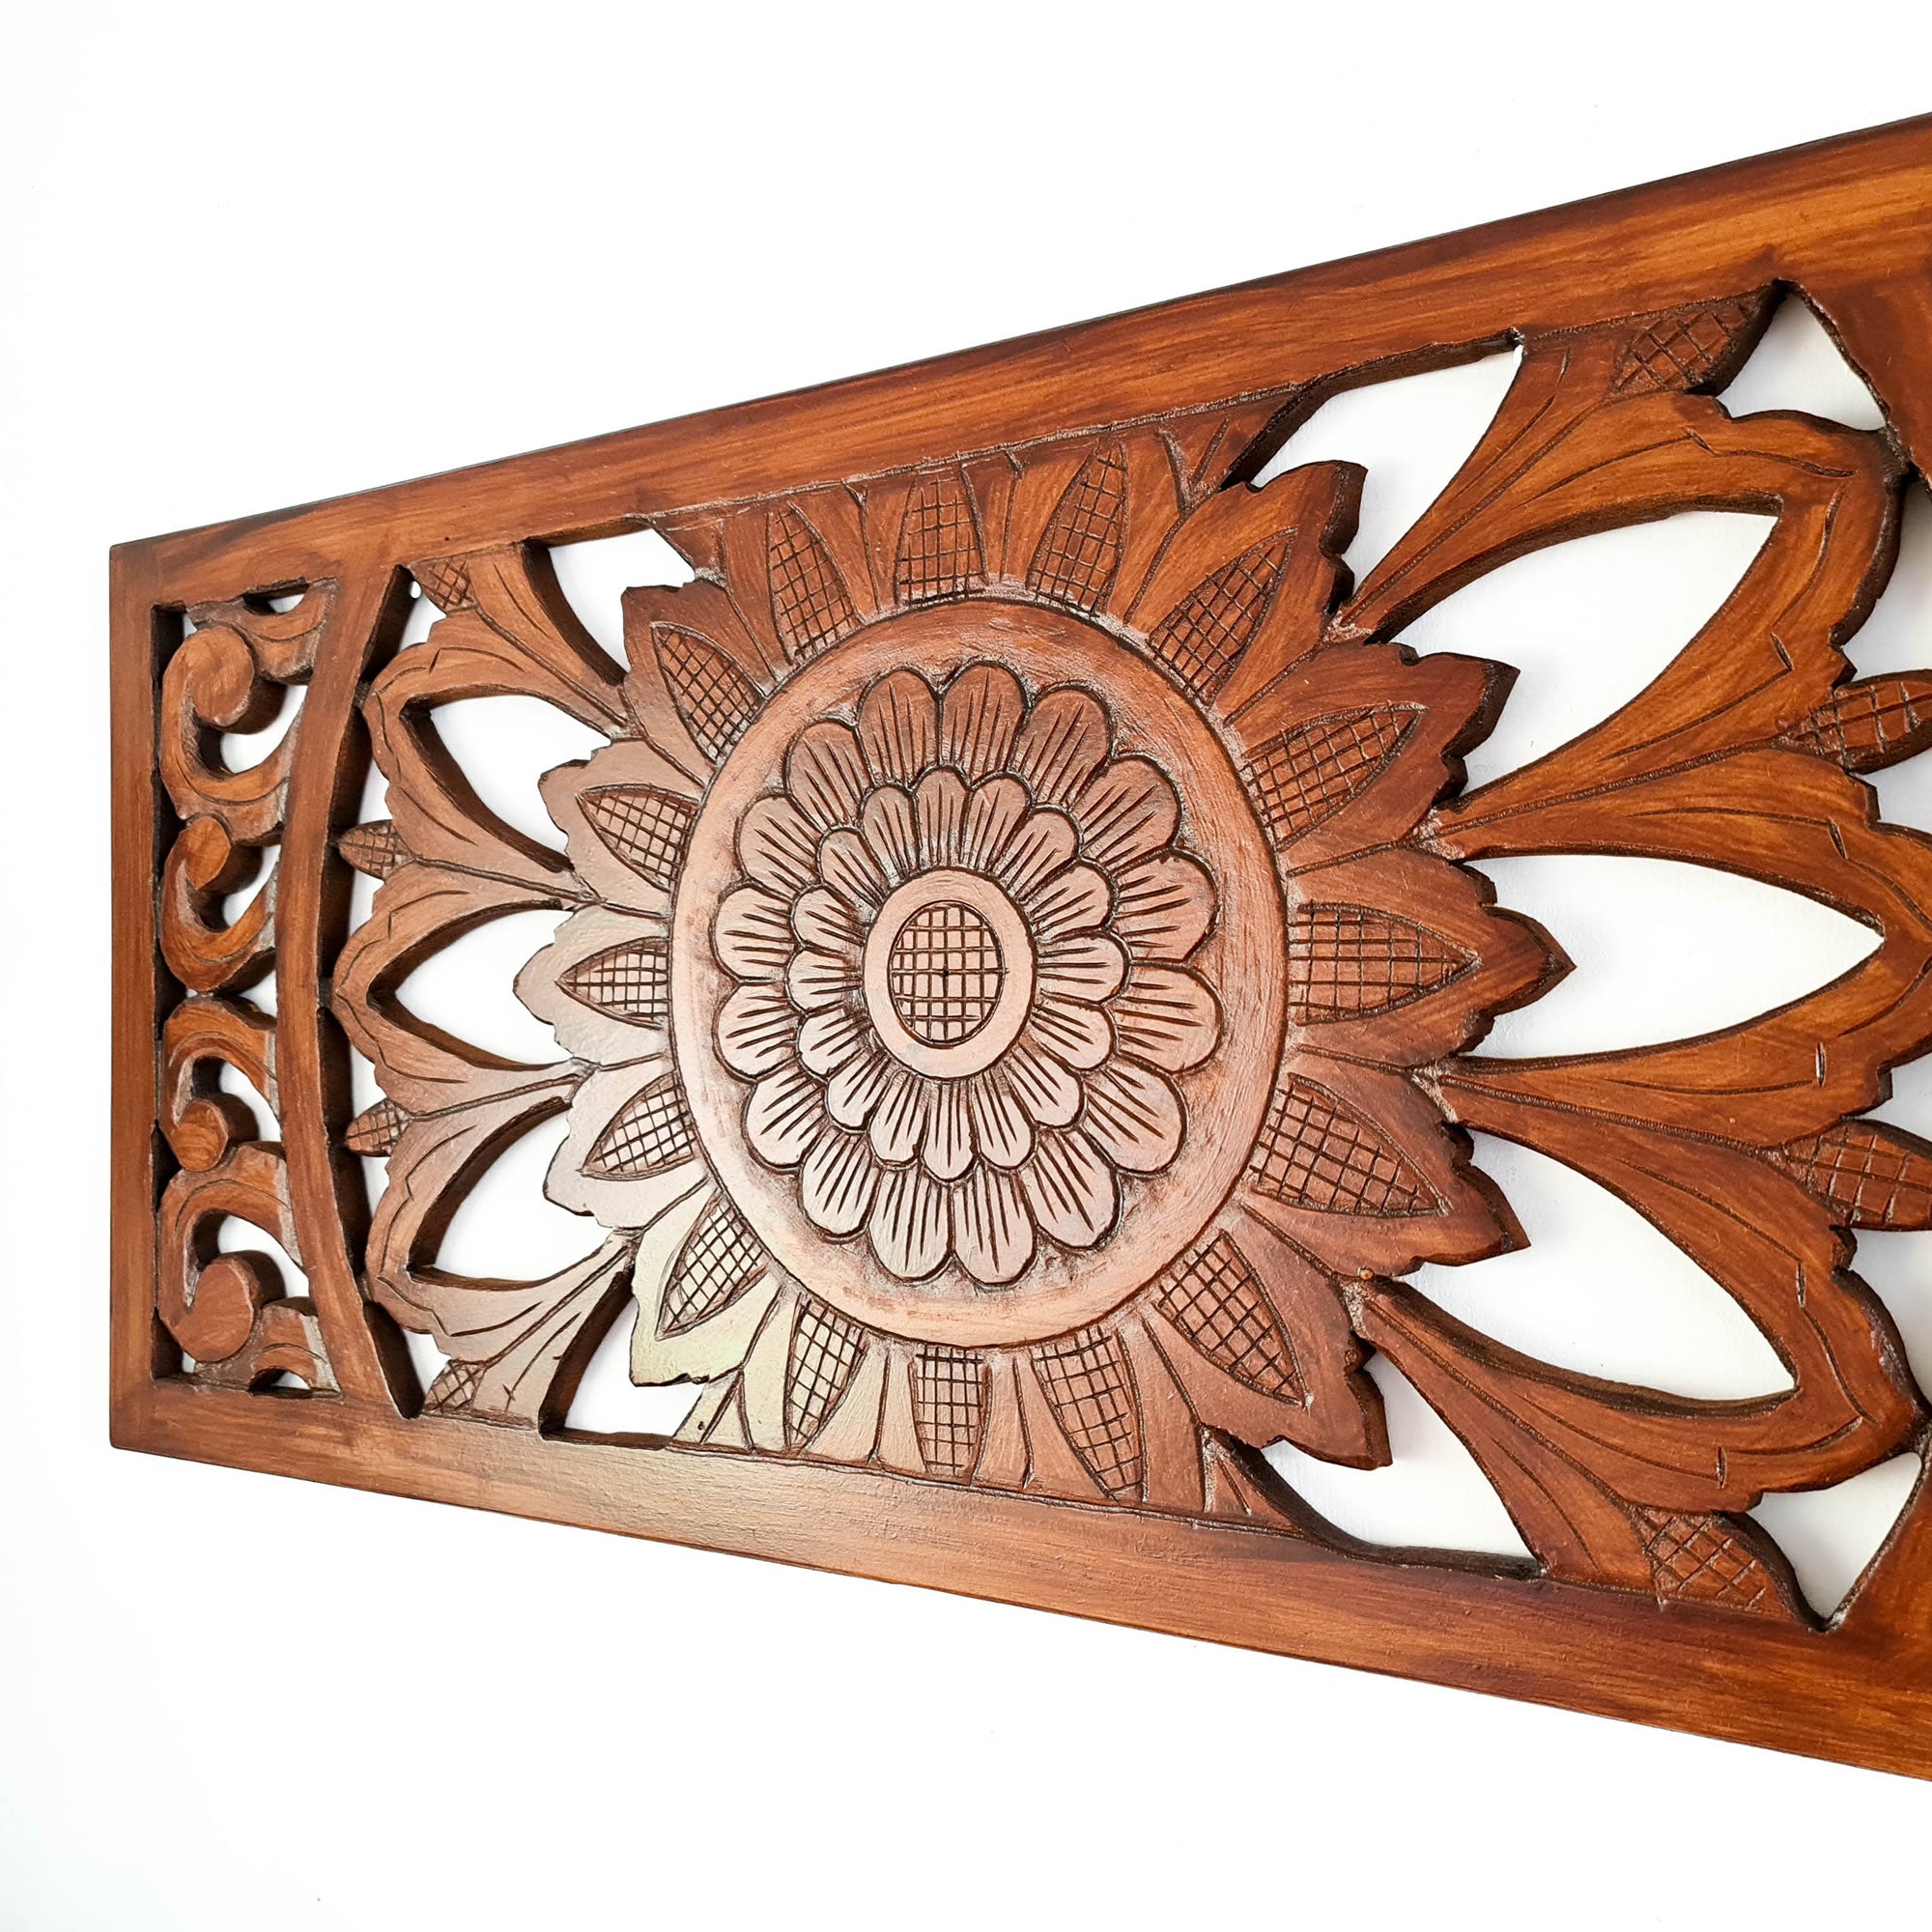 Hand Carved Wooden Wall Art - Decorative Mandala Yoga Walnut Panel